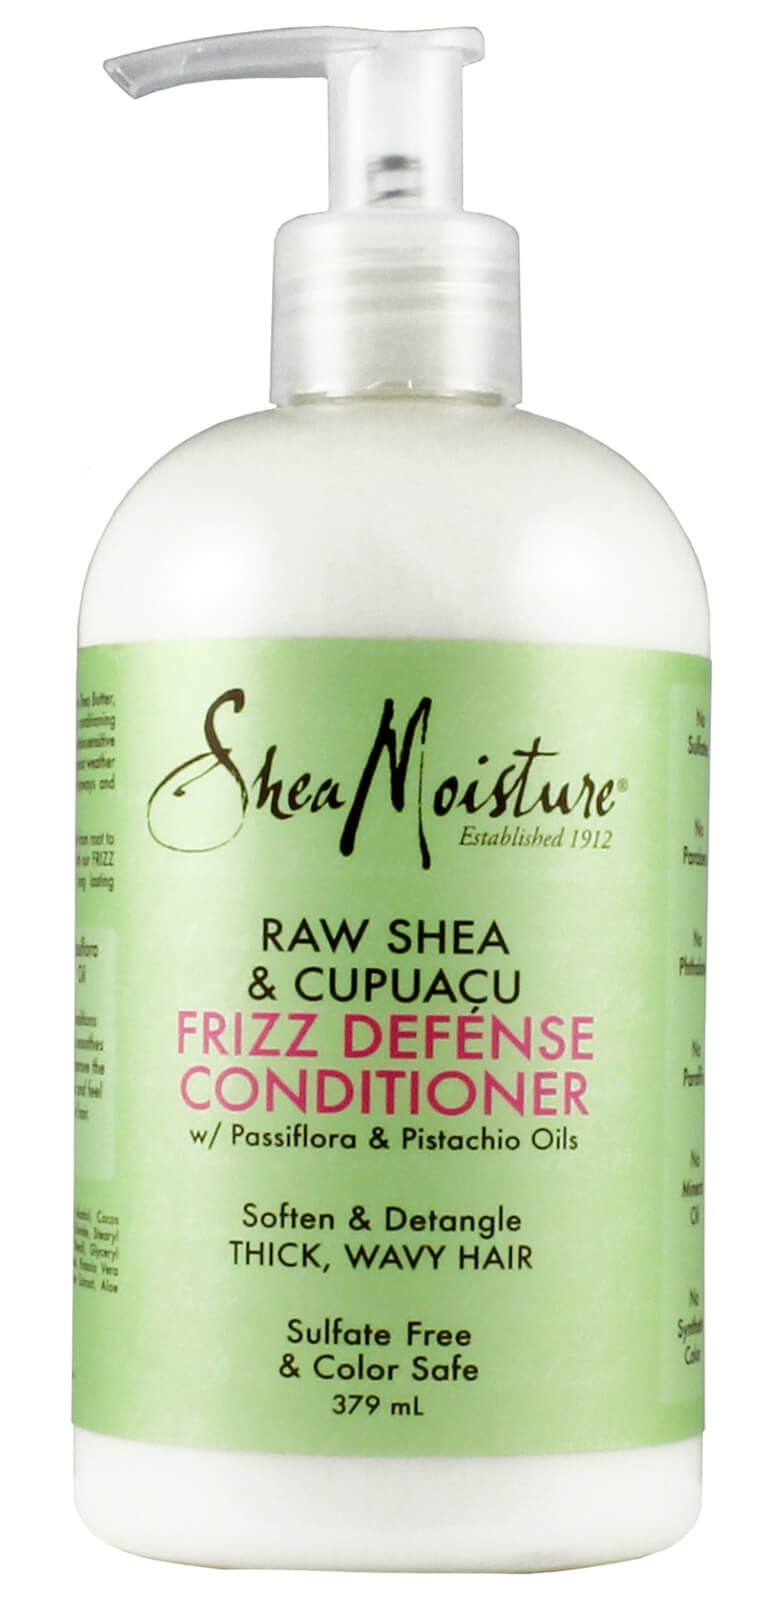 Shea Moisture Raw Shea & Cupuacu Frizz Defense Conditioner